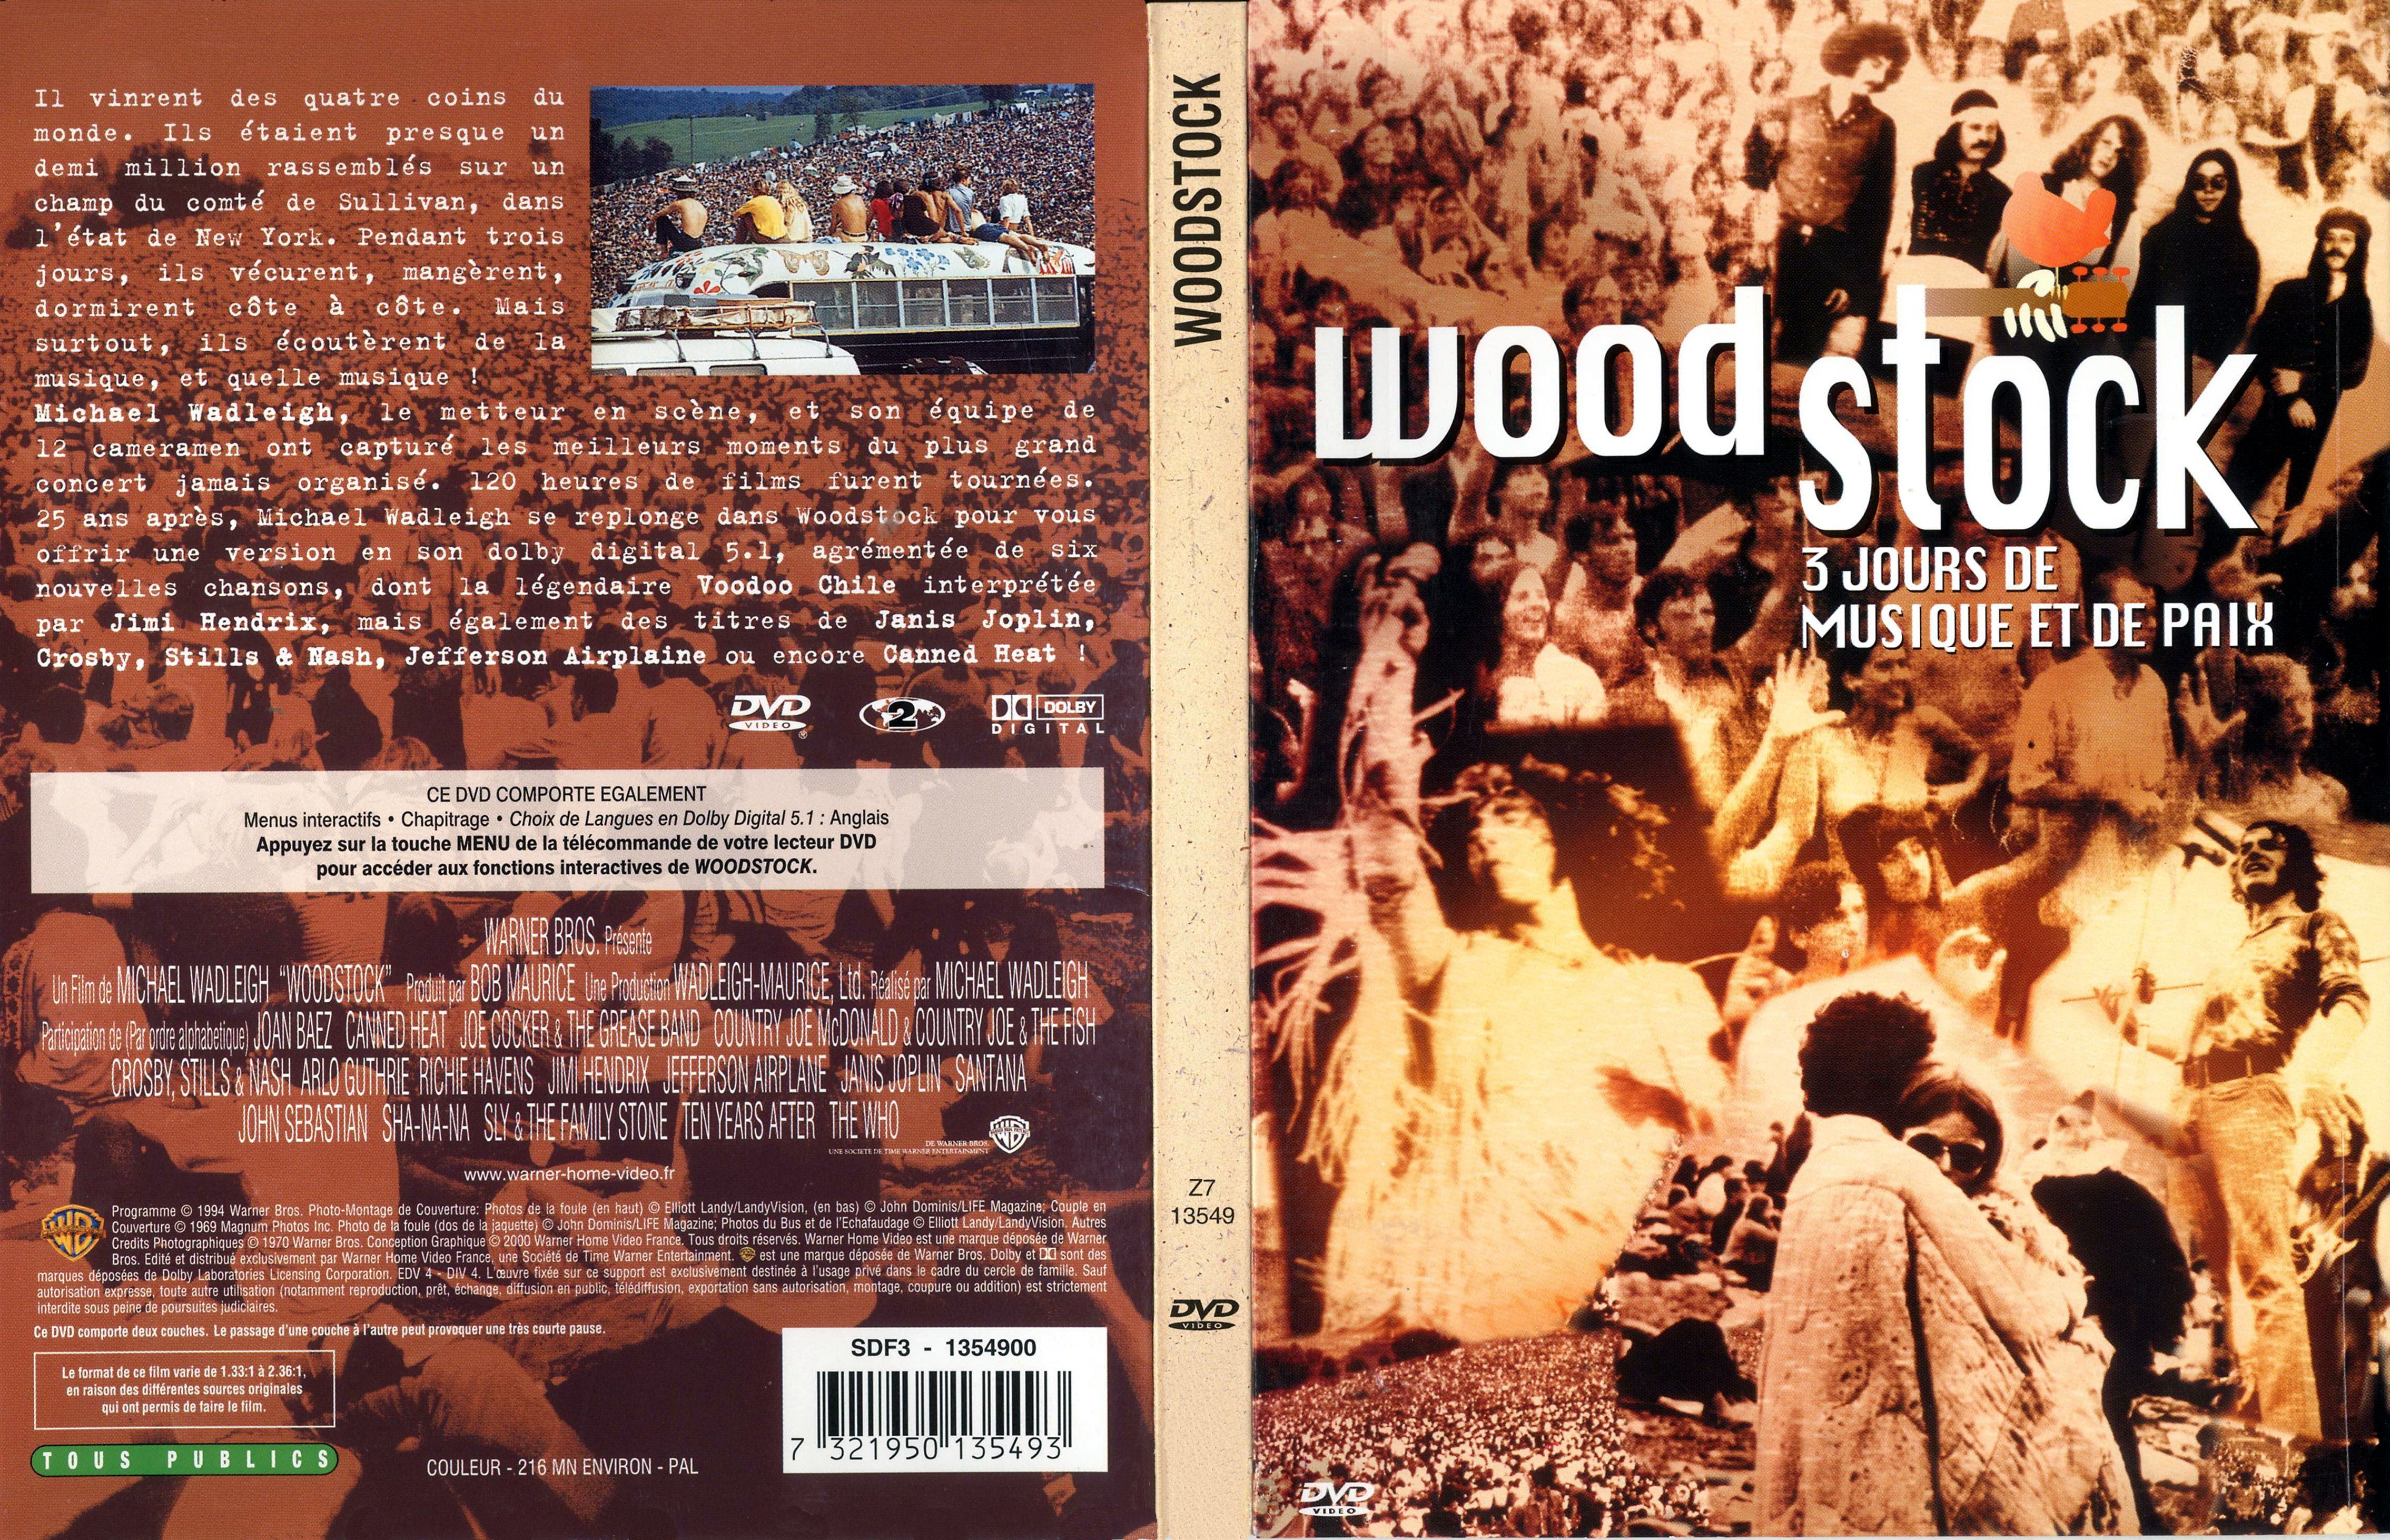 Jaquette DVD Woodstock v3